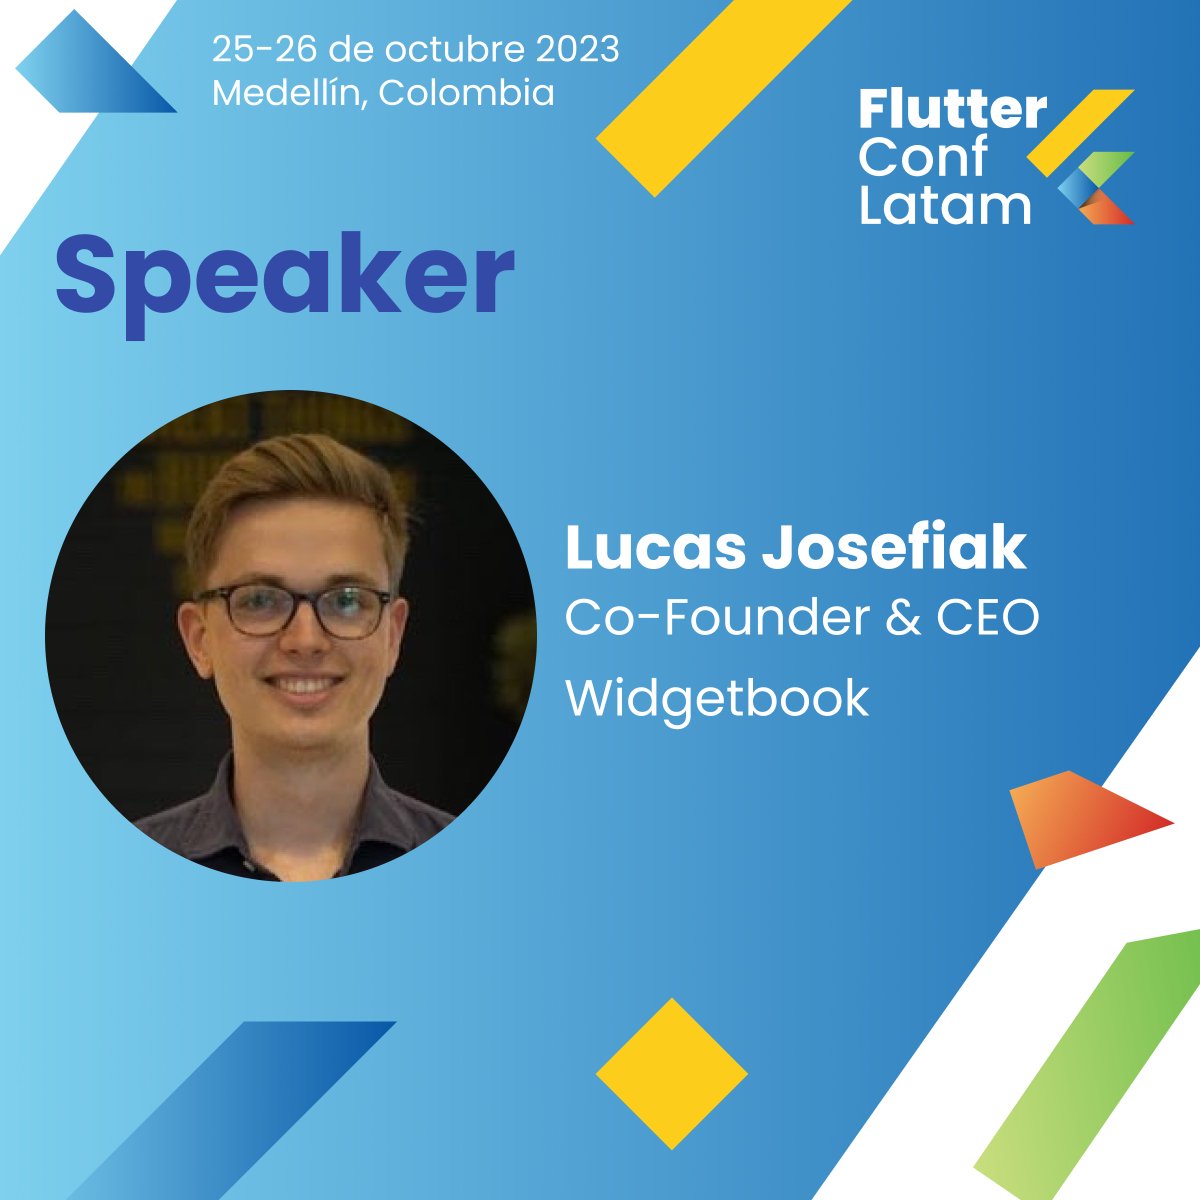 We're thrilled to announce this fantastic speaker for #FlutterConfLatam! 🤩 Lucas Josefiak, Co-Founder & CEO @widgetbook_io ¡Estamocionados de anunciar a este increíble conferencista en #FlutterConfLatam! 🤩 Lucas Josefiak, Co-Founder & CEO @widgetbook_io